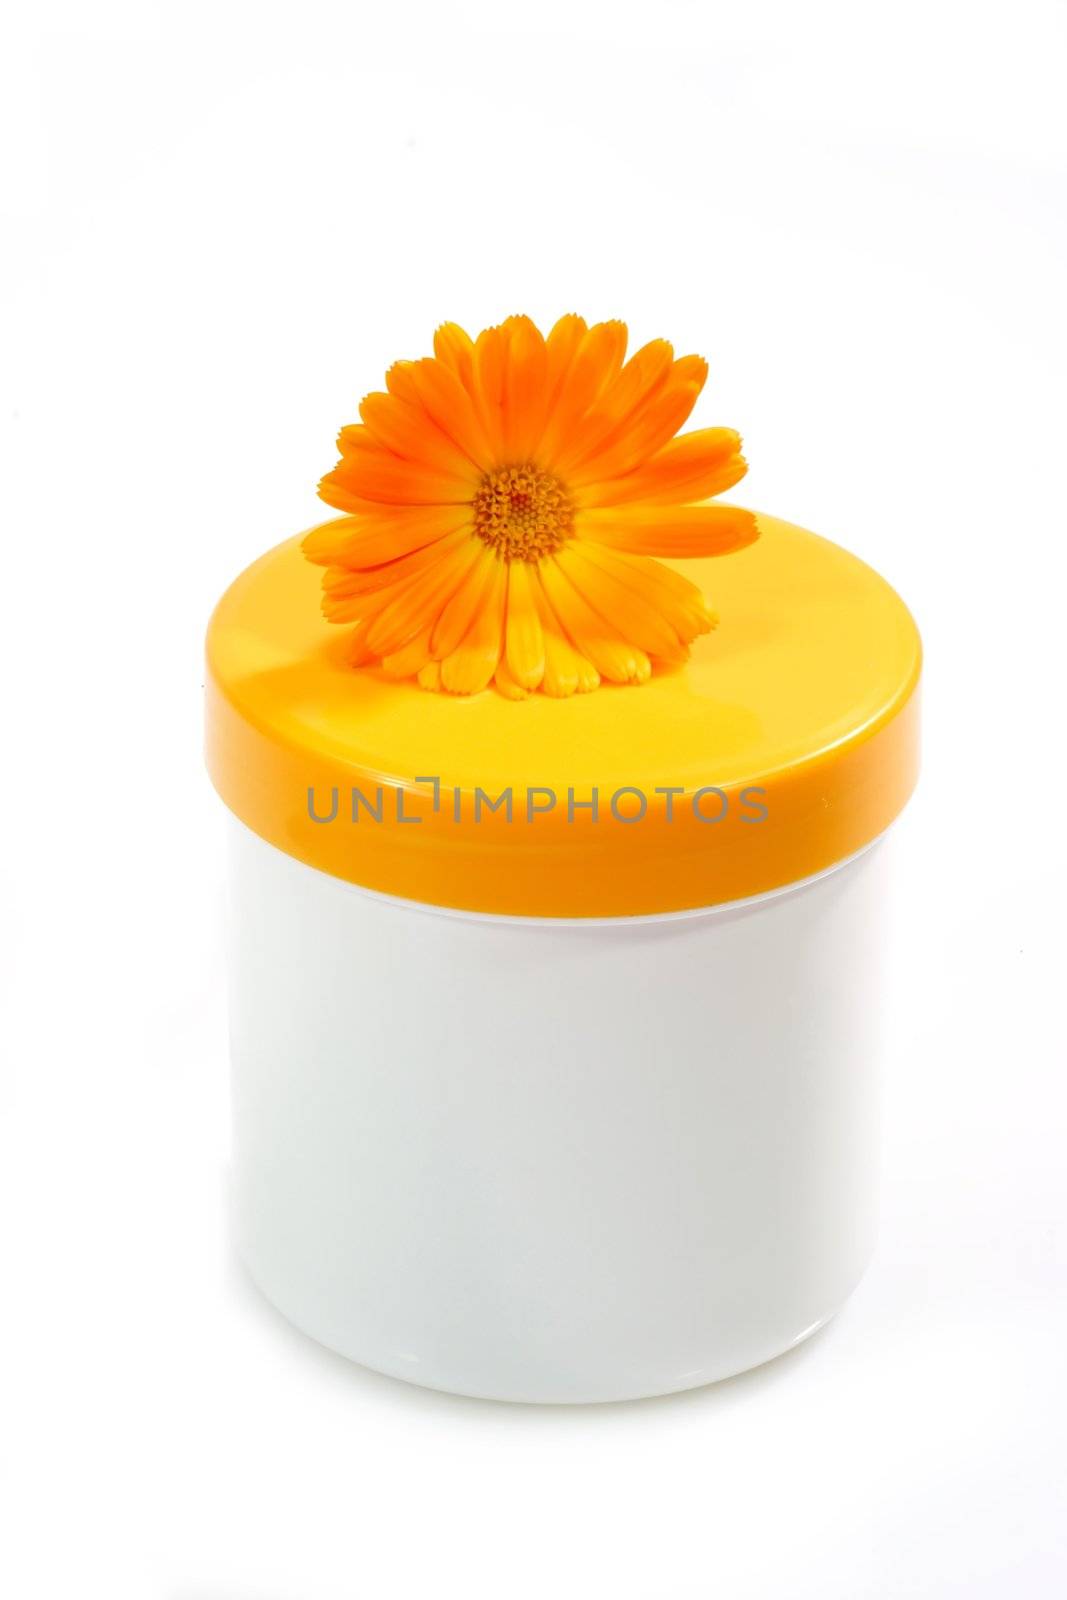 Cream pot with marigold on white background